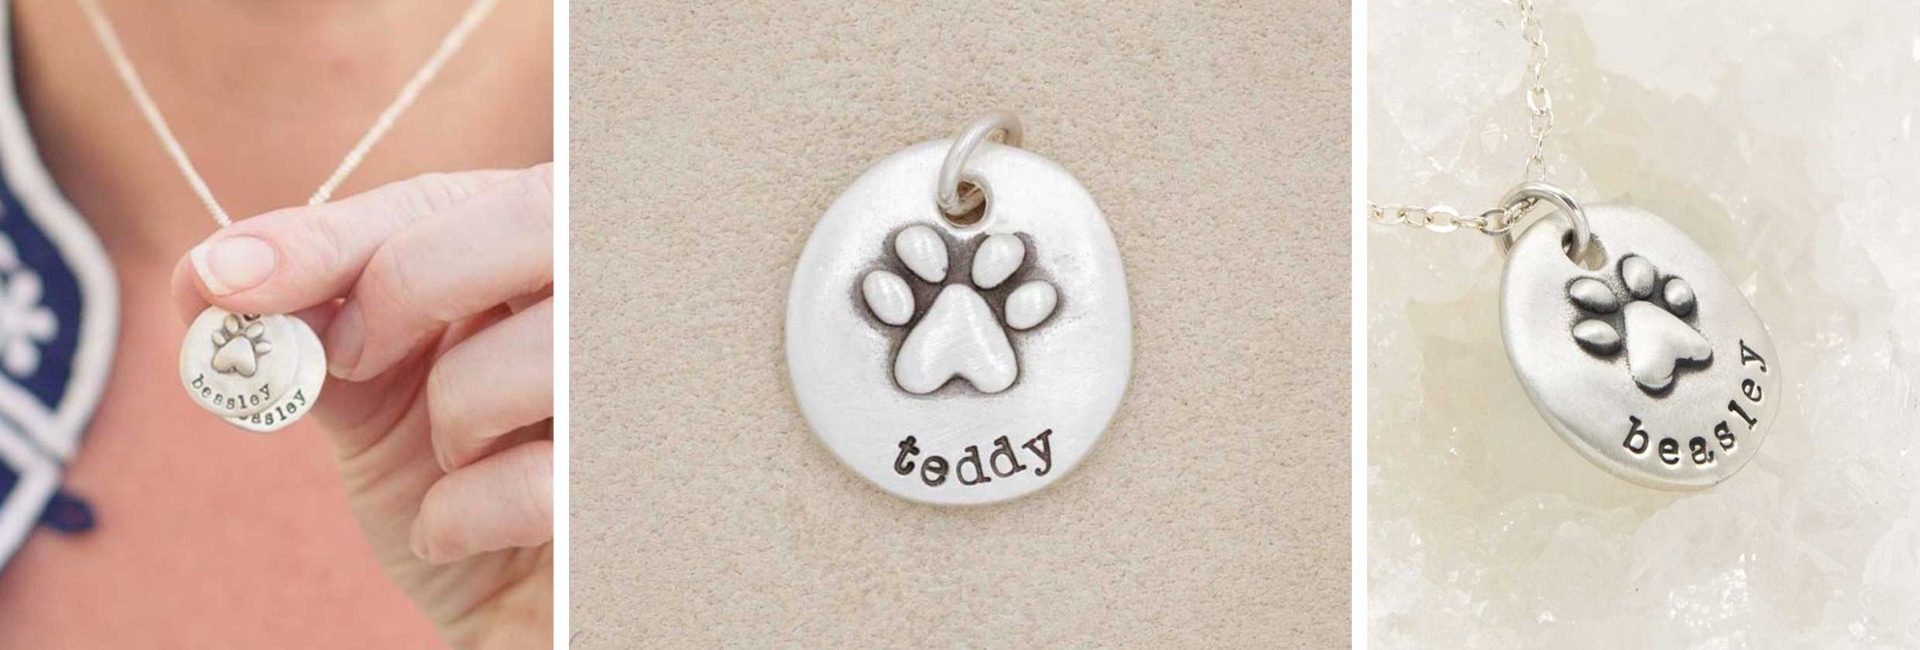 Furry Footprint Necklace Charm by Lisa Leonard